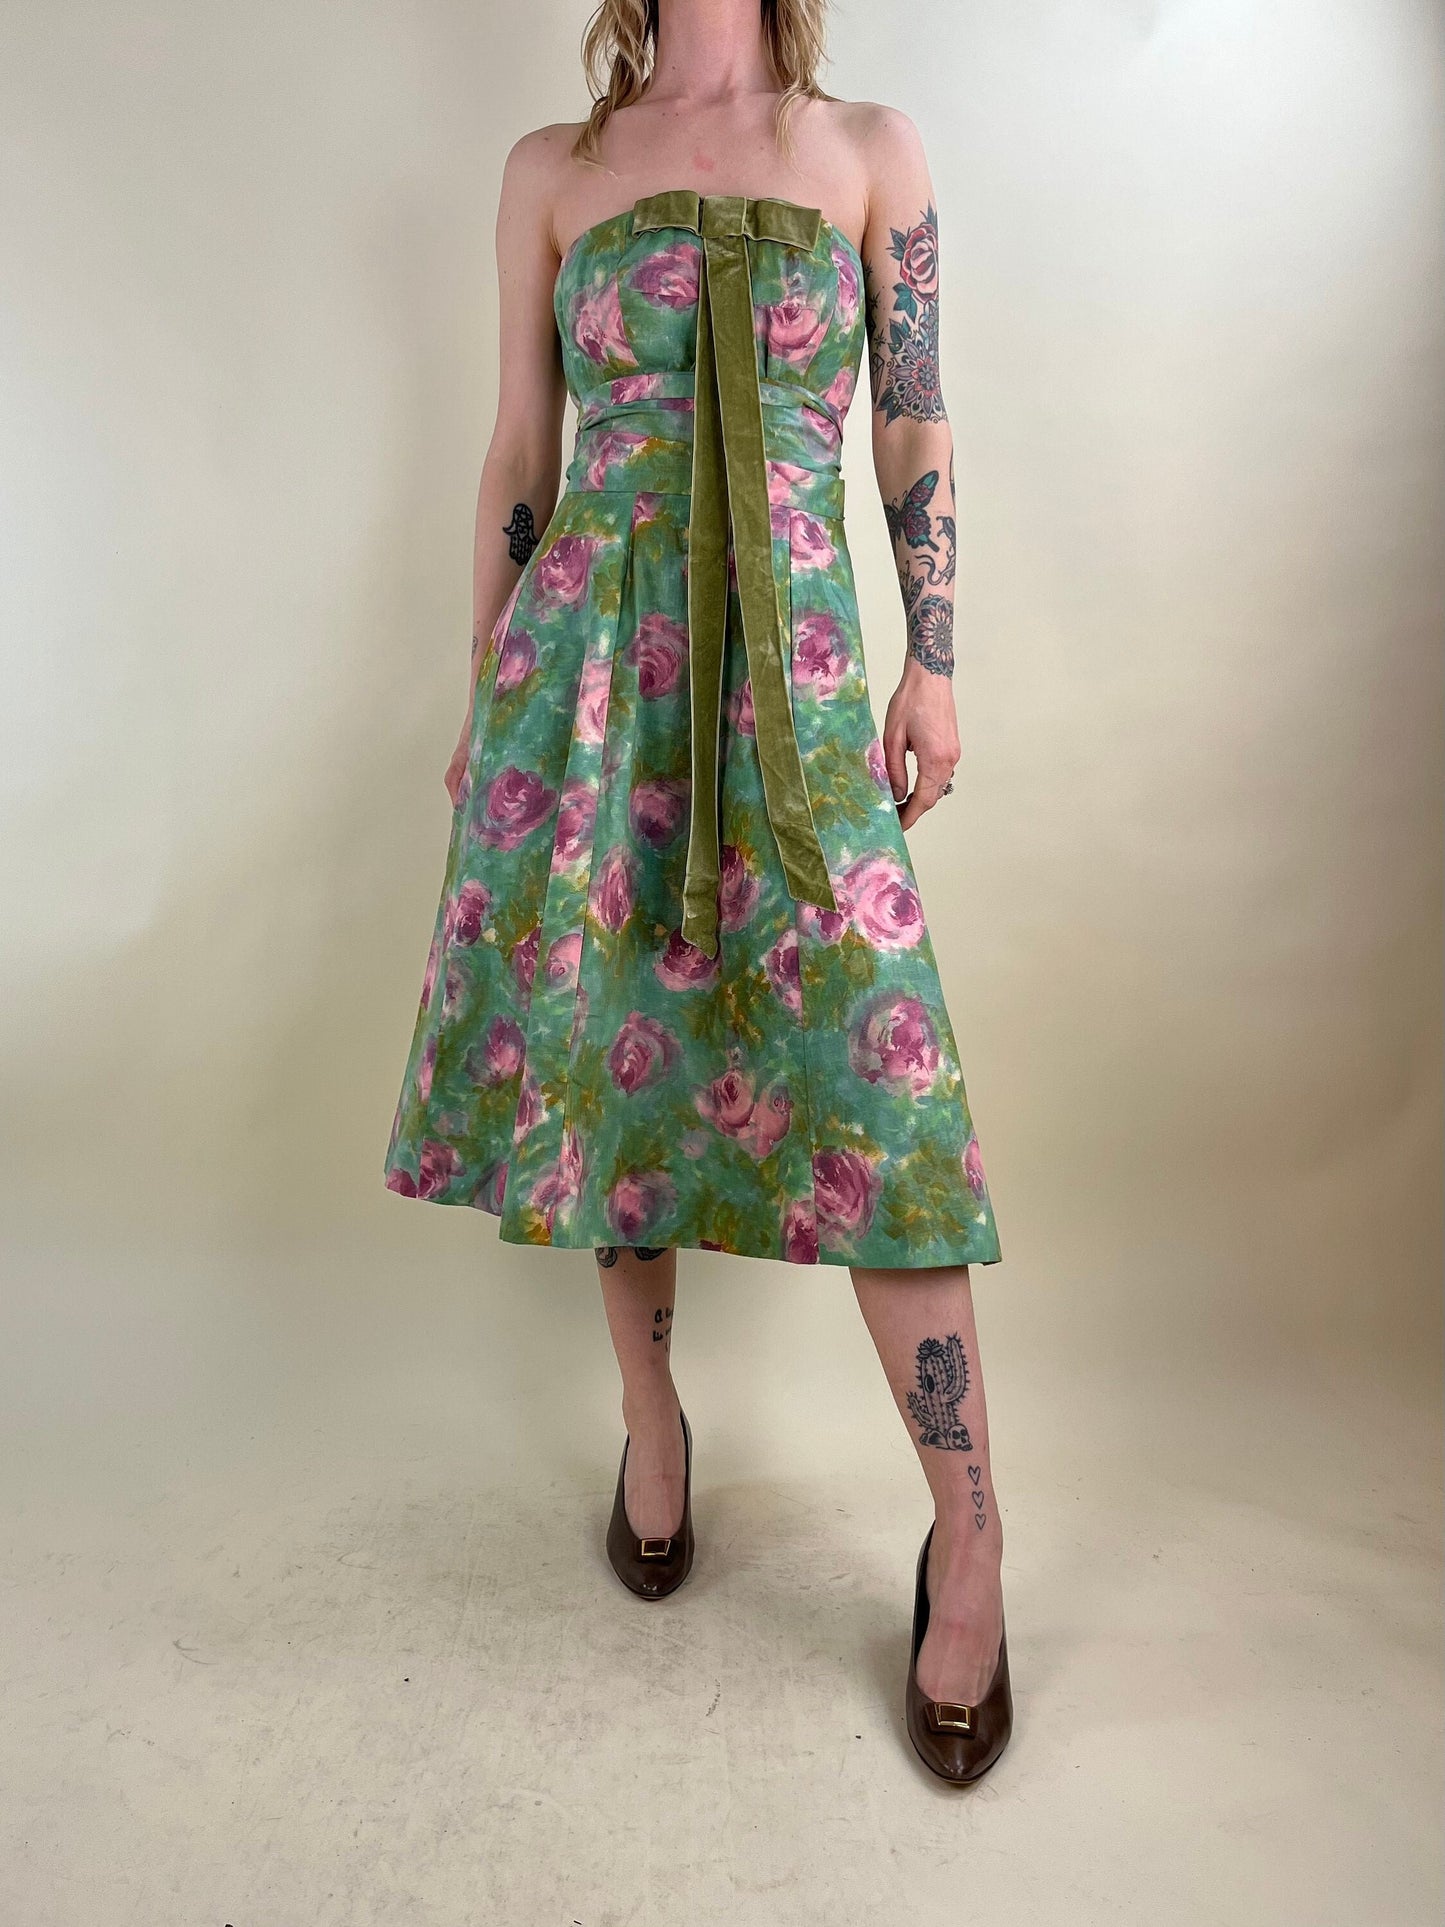 1950s Green Floral Strapless Formal Dress / Medium